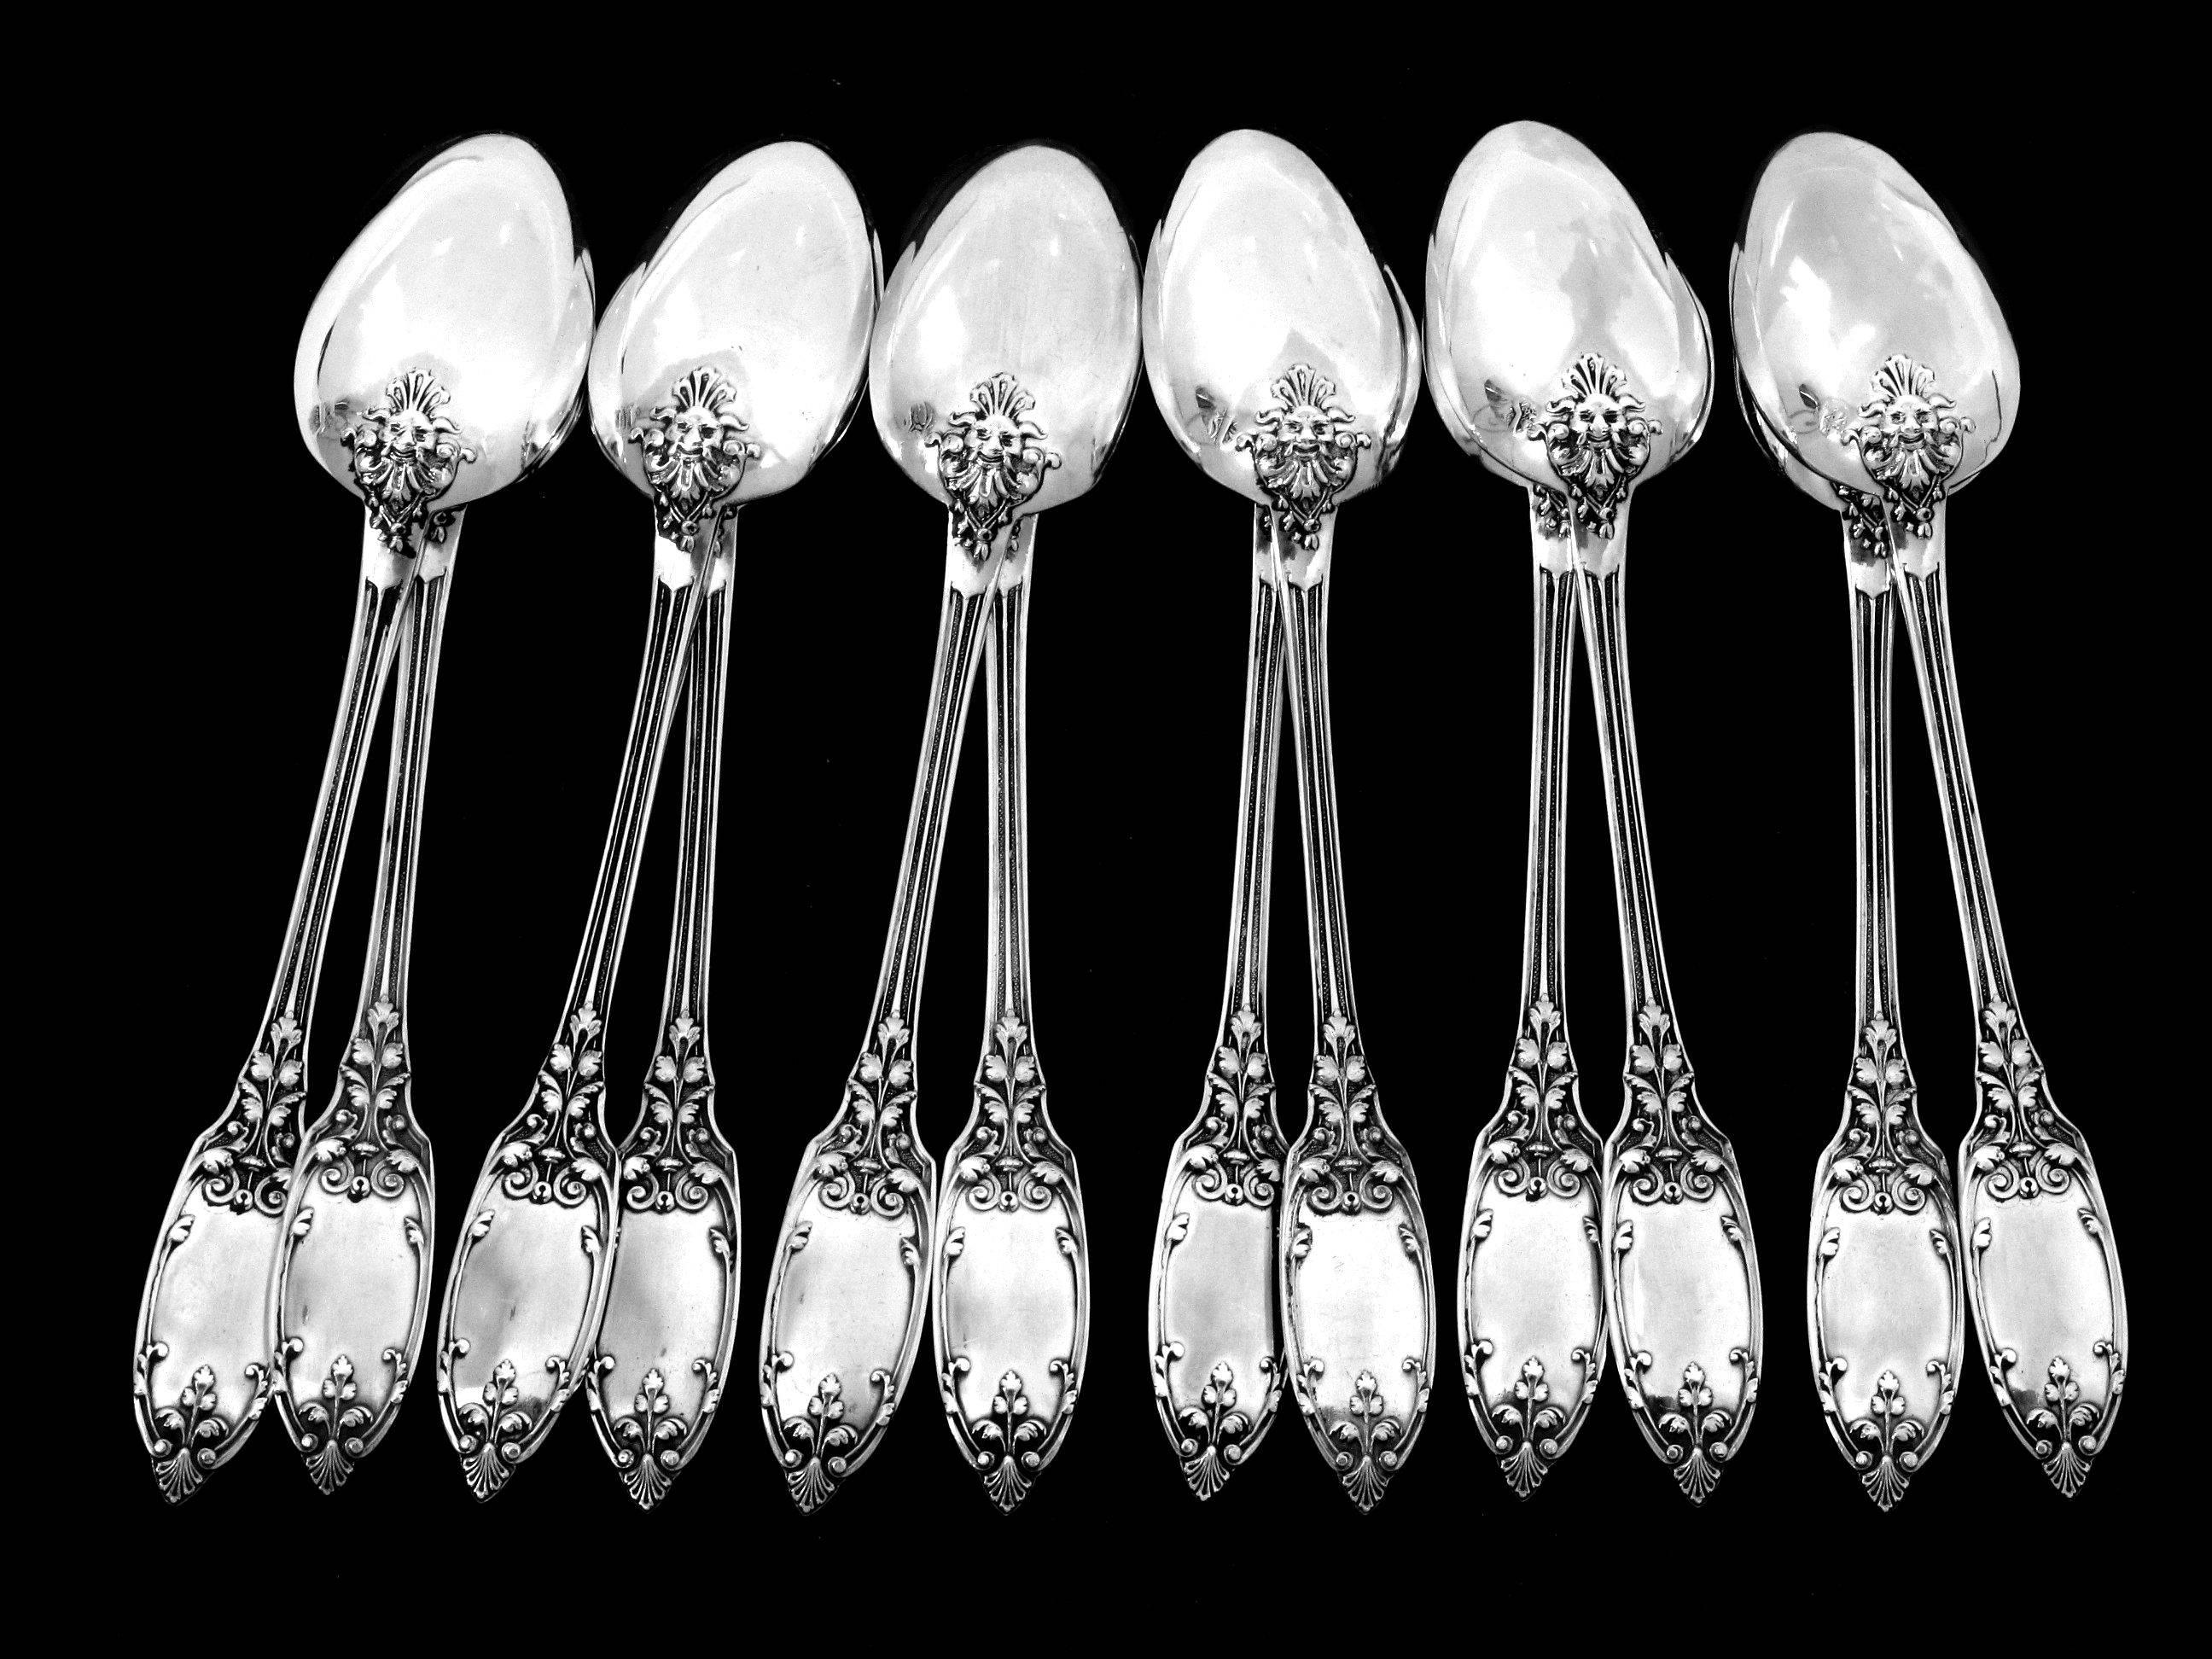 Women's or Men's Puiforcat French Sterling Silver Tea Spoons Set 12 pc original box Mascaron